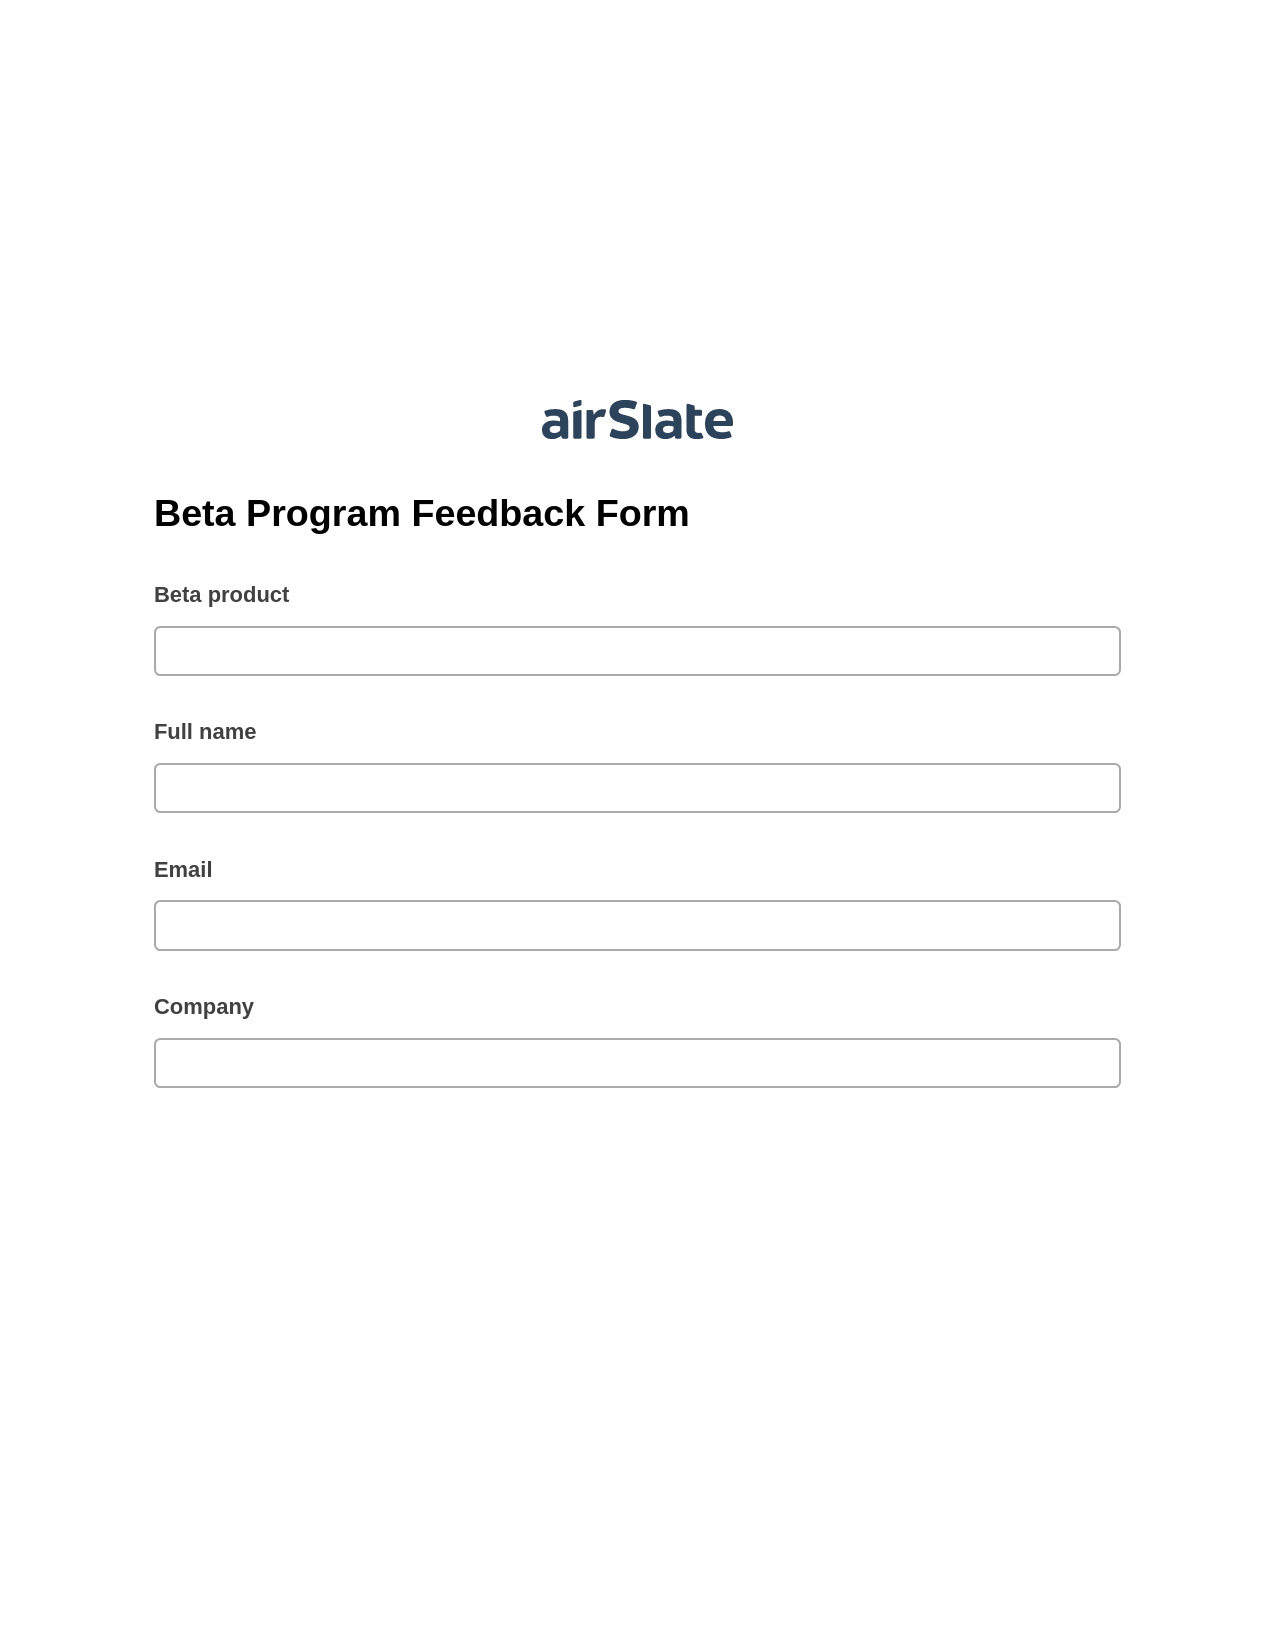 Beta Program Feedback Form Pre-fill Dropdowns from Google Sheet Bot, Invoke Salesforce Process Bot, Export to Excel 365 Bot